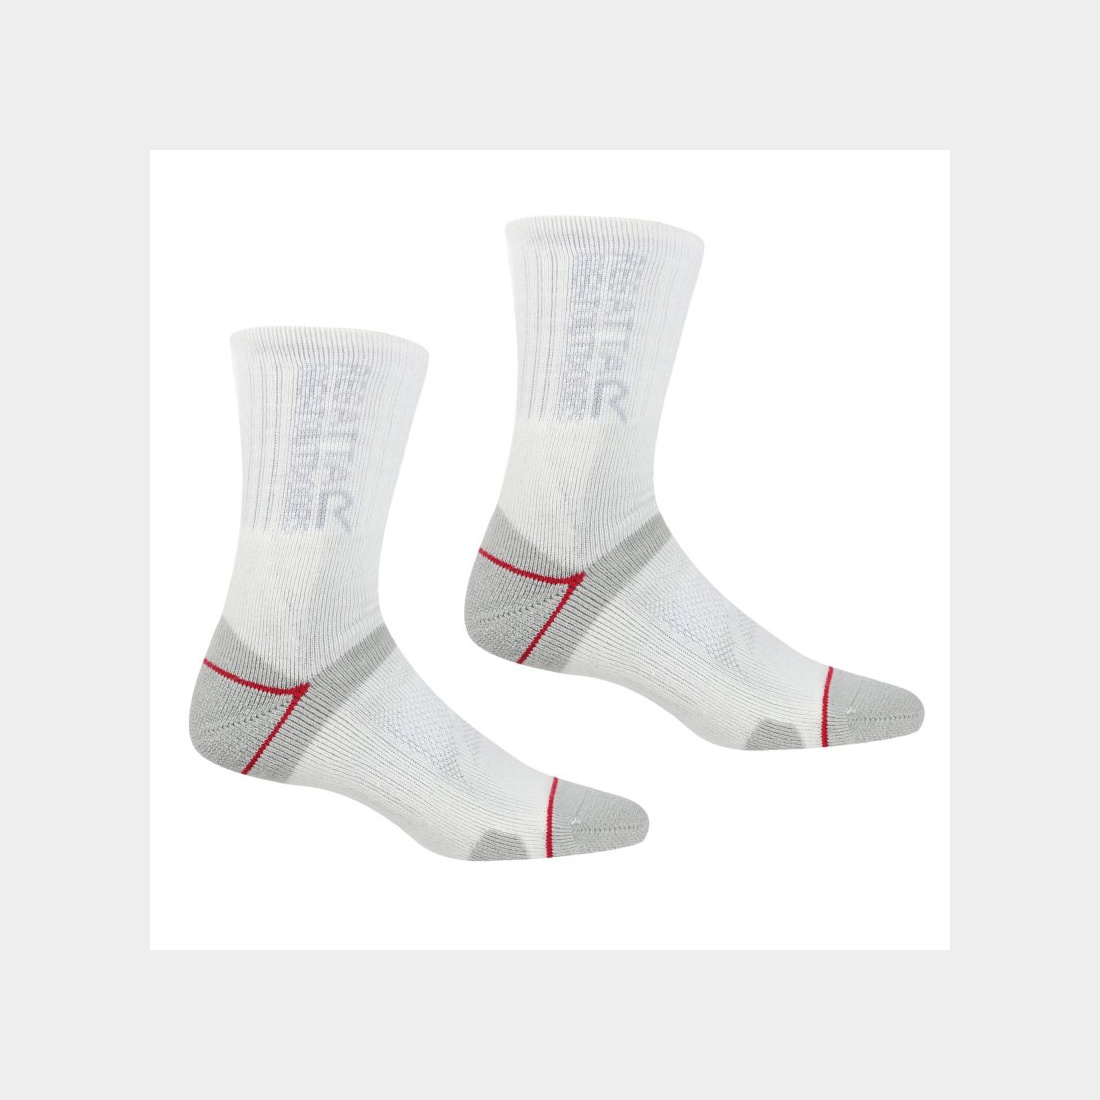 Regatta Damen Socken Blister Protection II Weiß 39-42